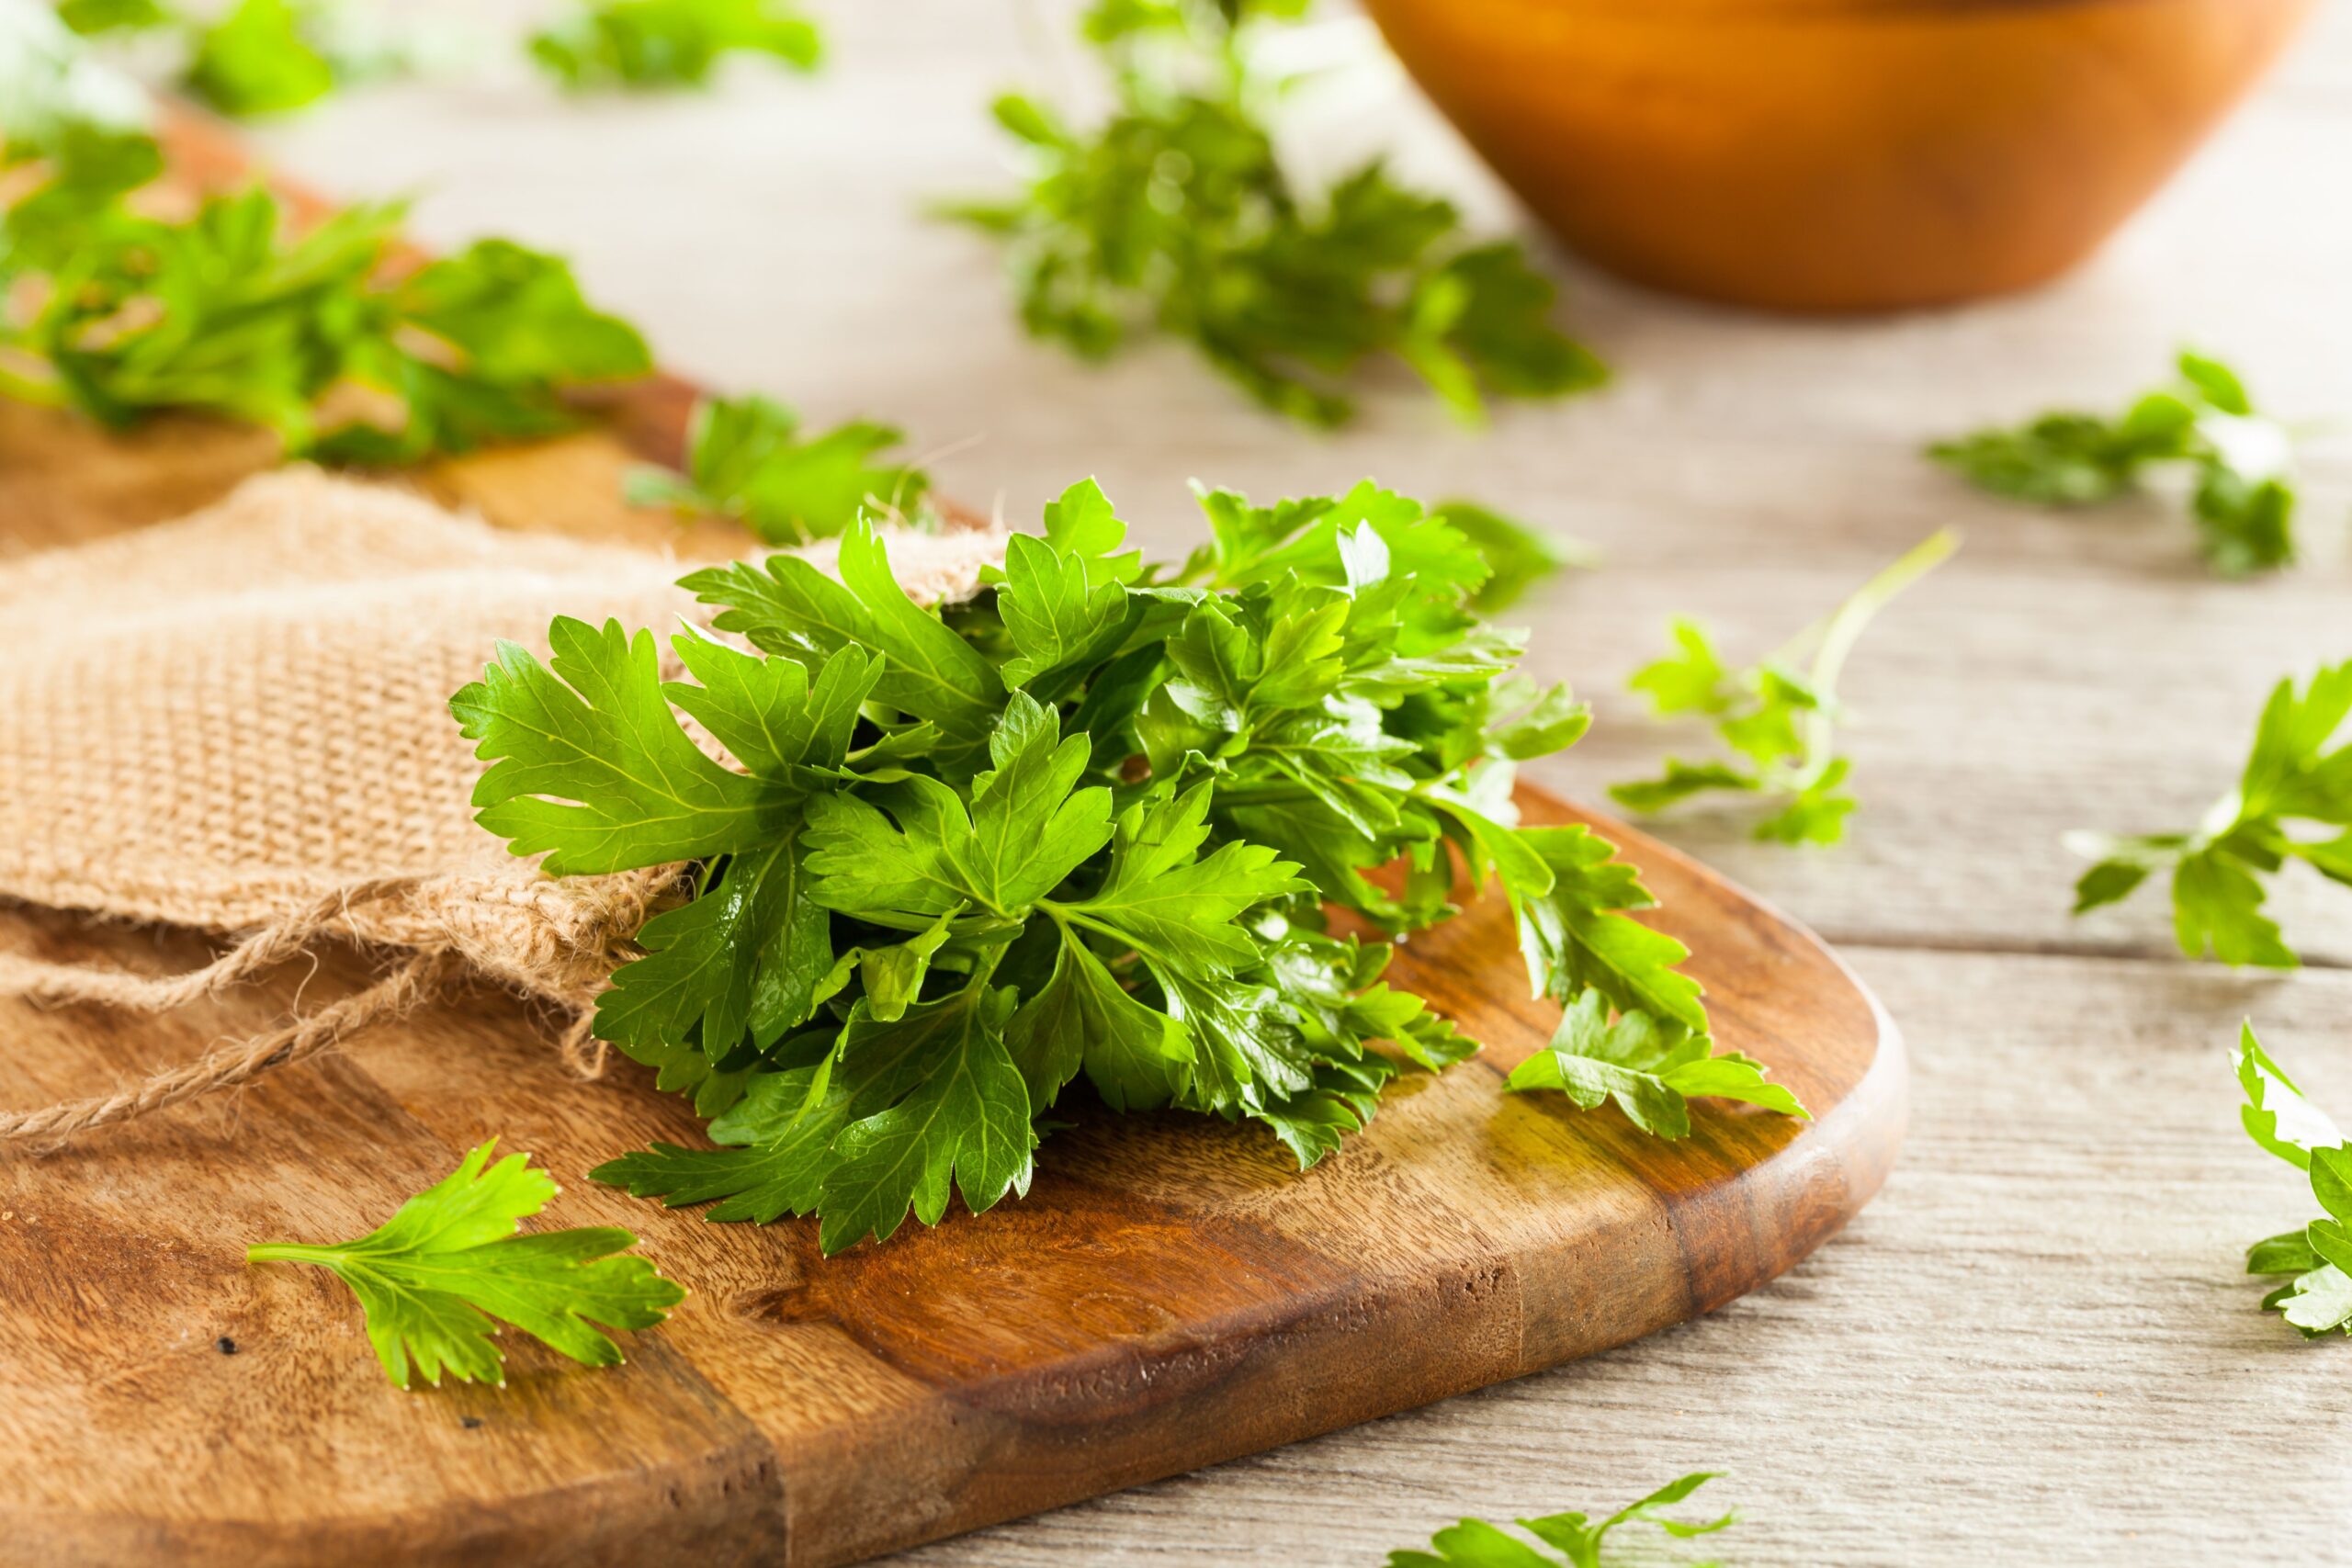 nutritious-treasure-parsley:-contains-more-vitamin-c-than-orange